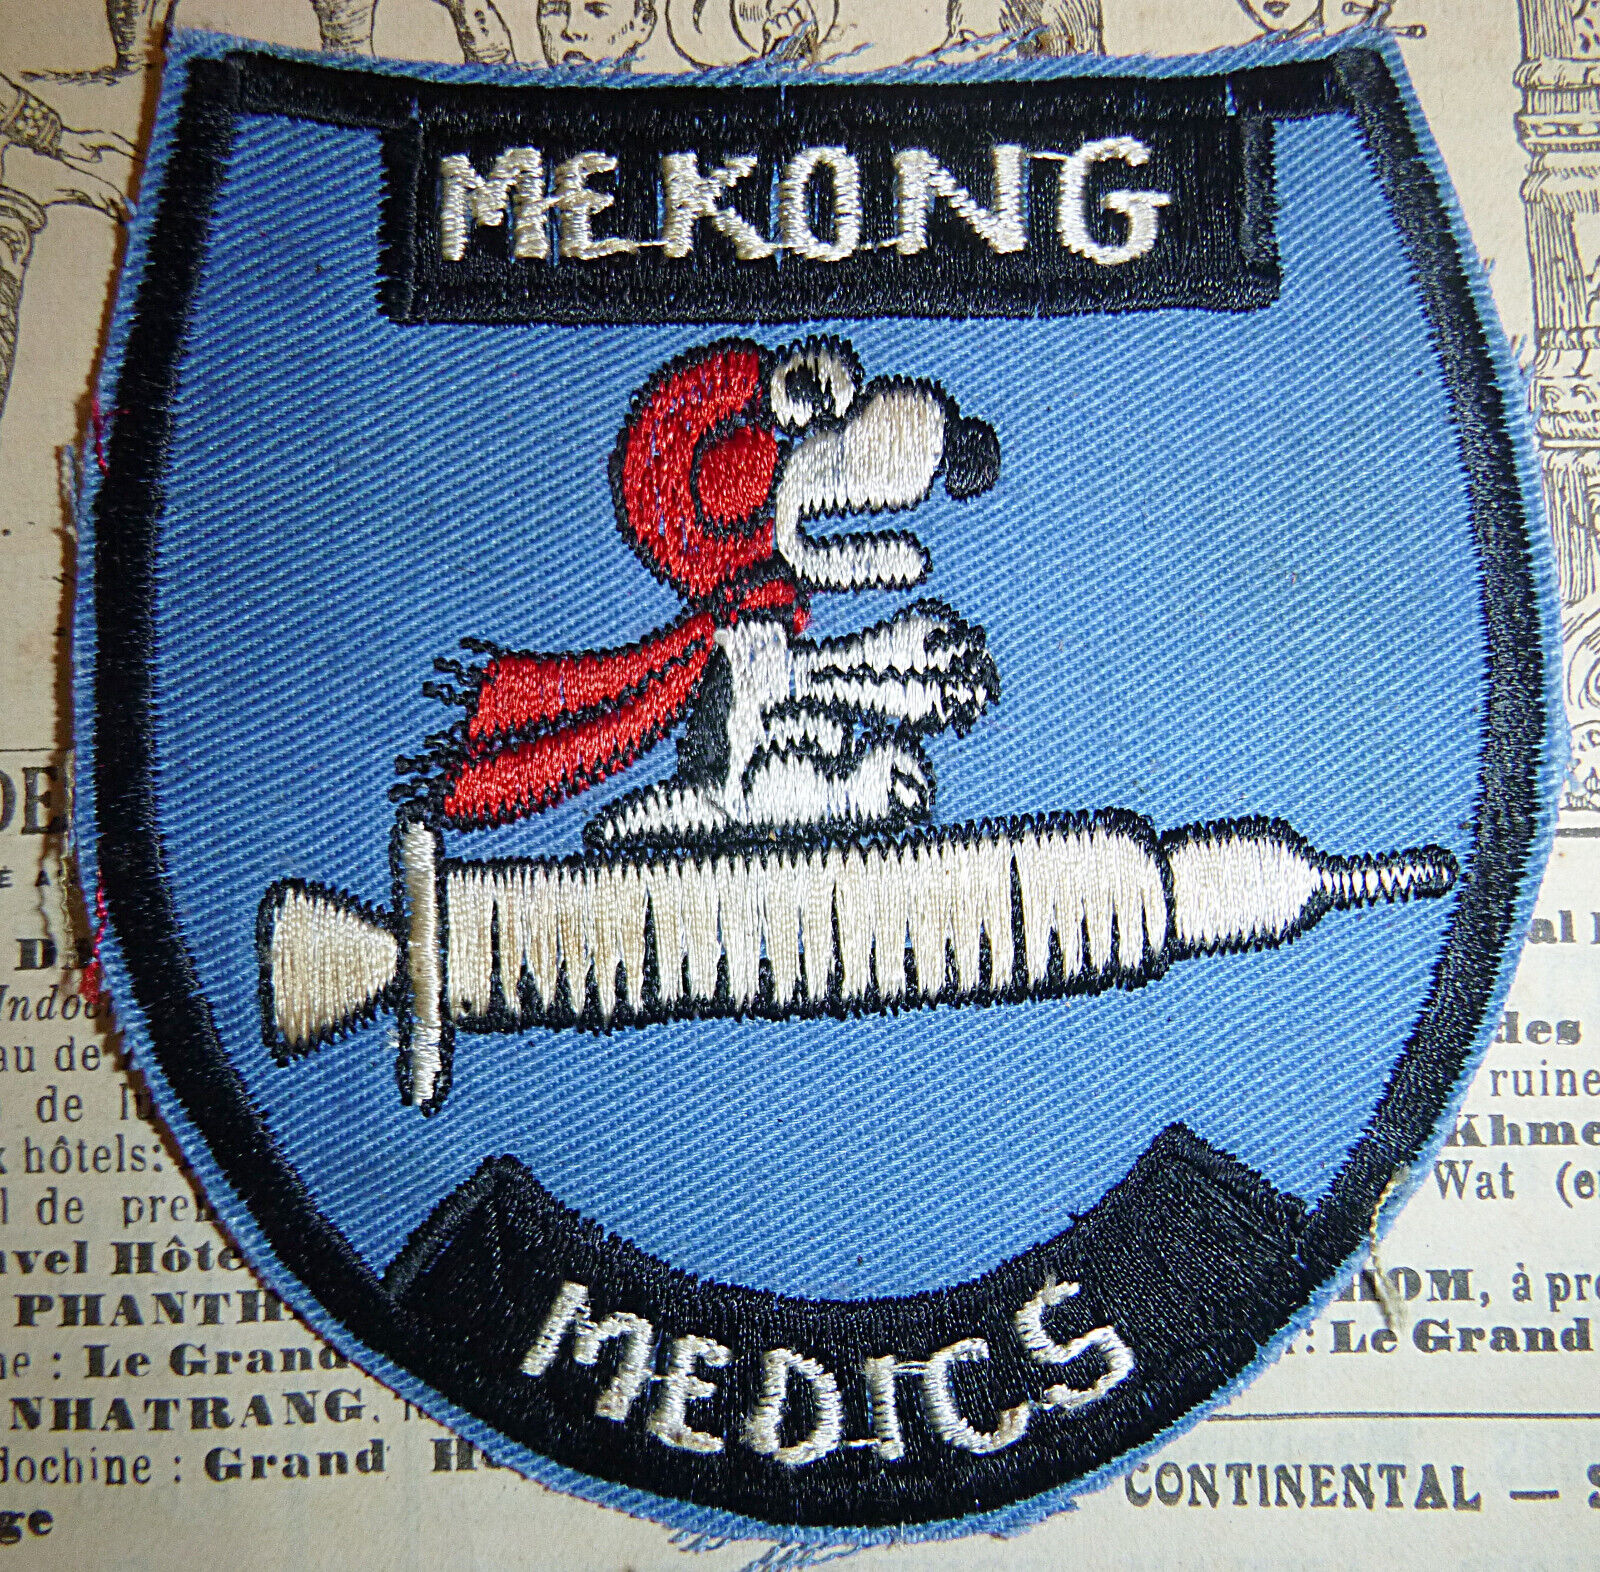 Rare Original SNOOPY PATCH - Air Medic Mekong Delta - Vietnam War - USAF - V.486